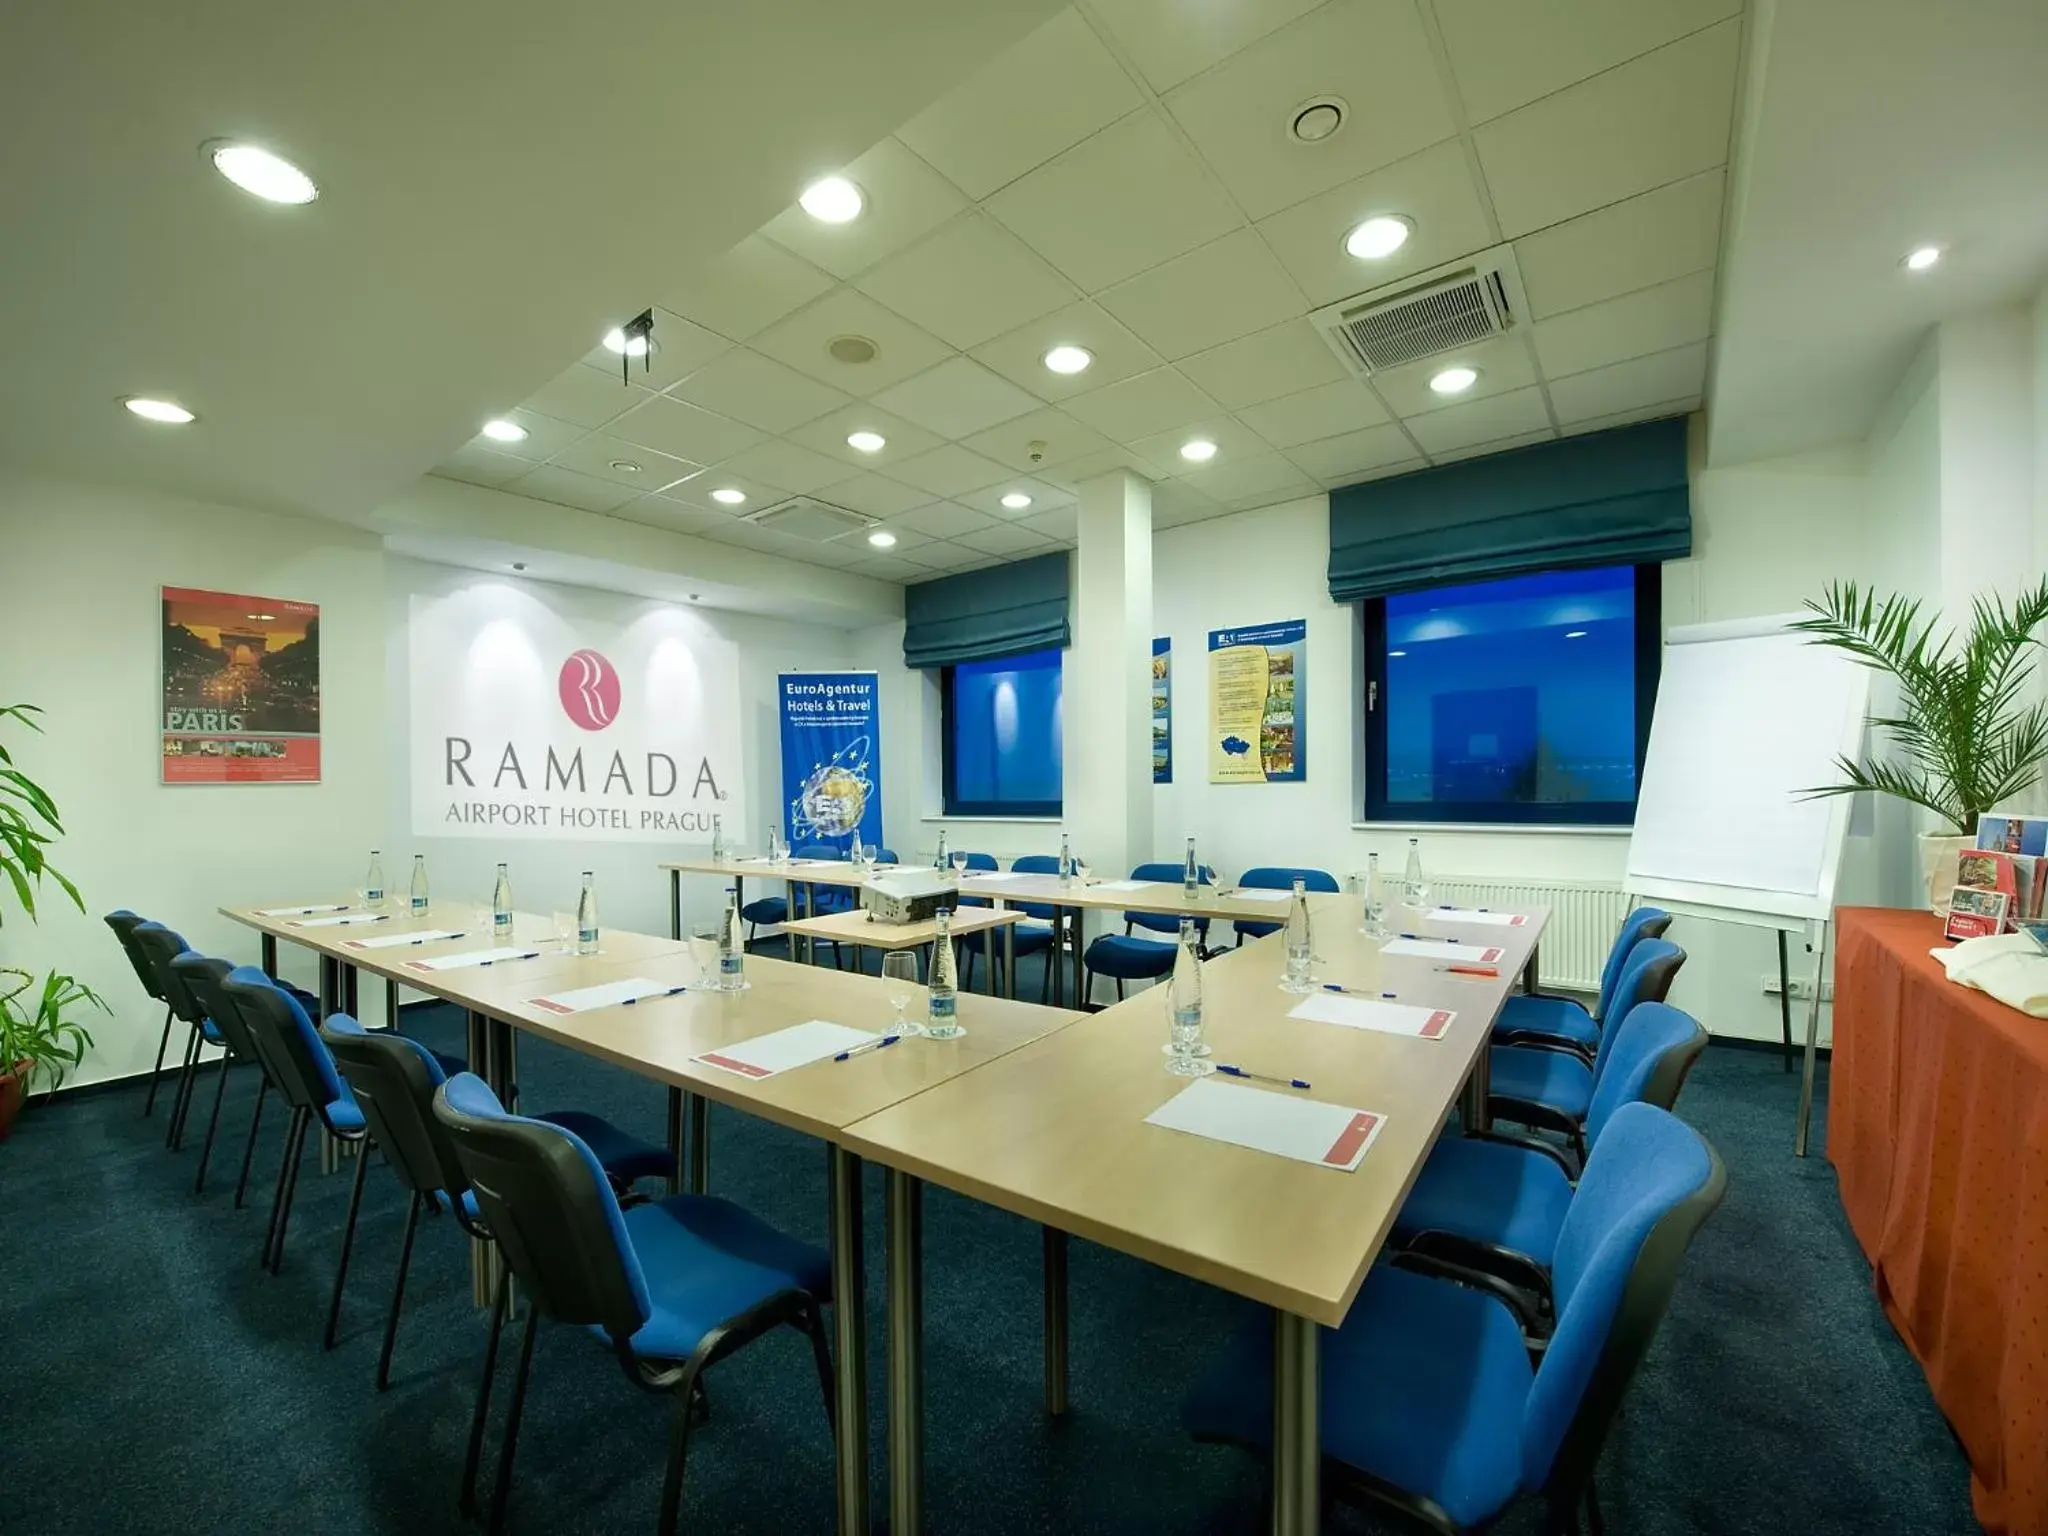 Business facilities in Ramada Airport Hotel Prague